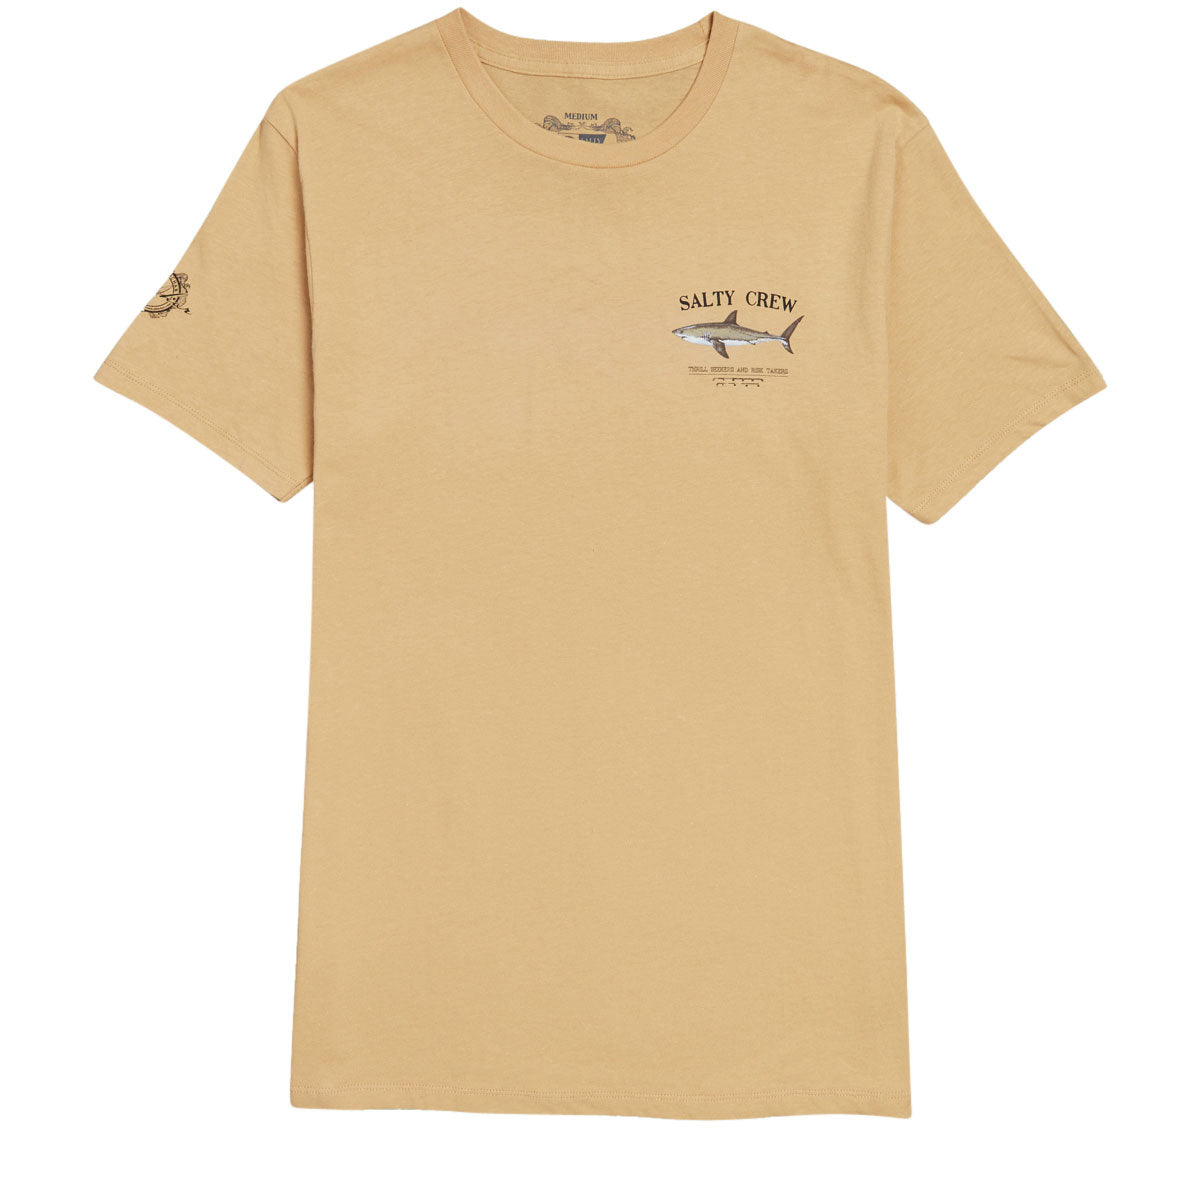 Salty Crew Bruce T-Shirt - Camel image 2